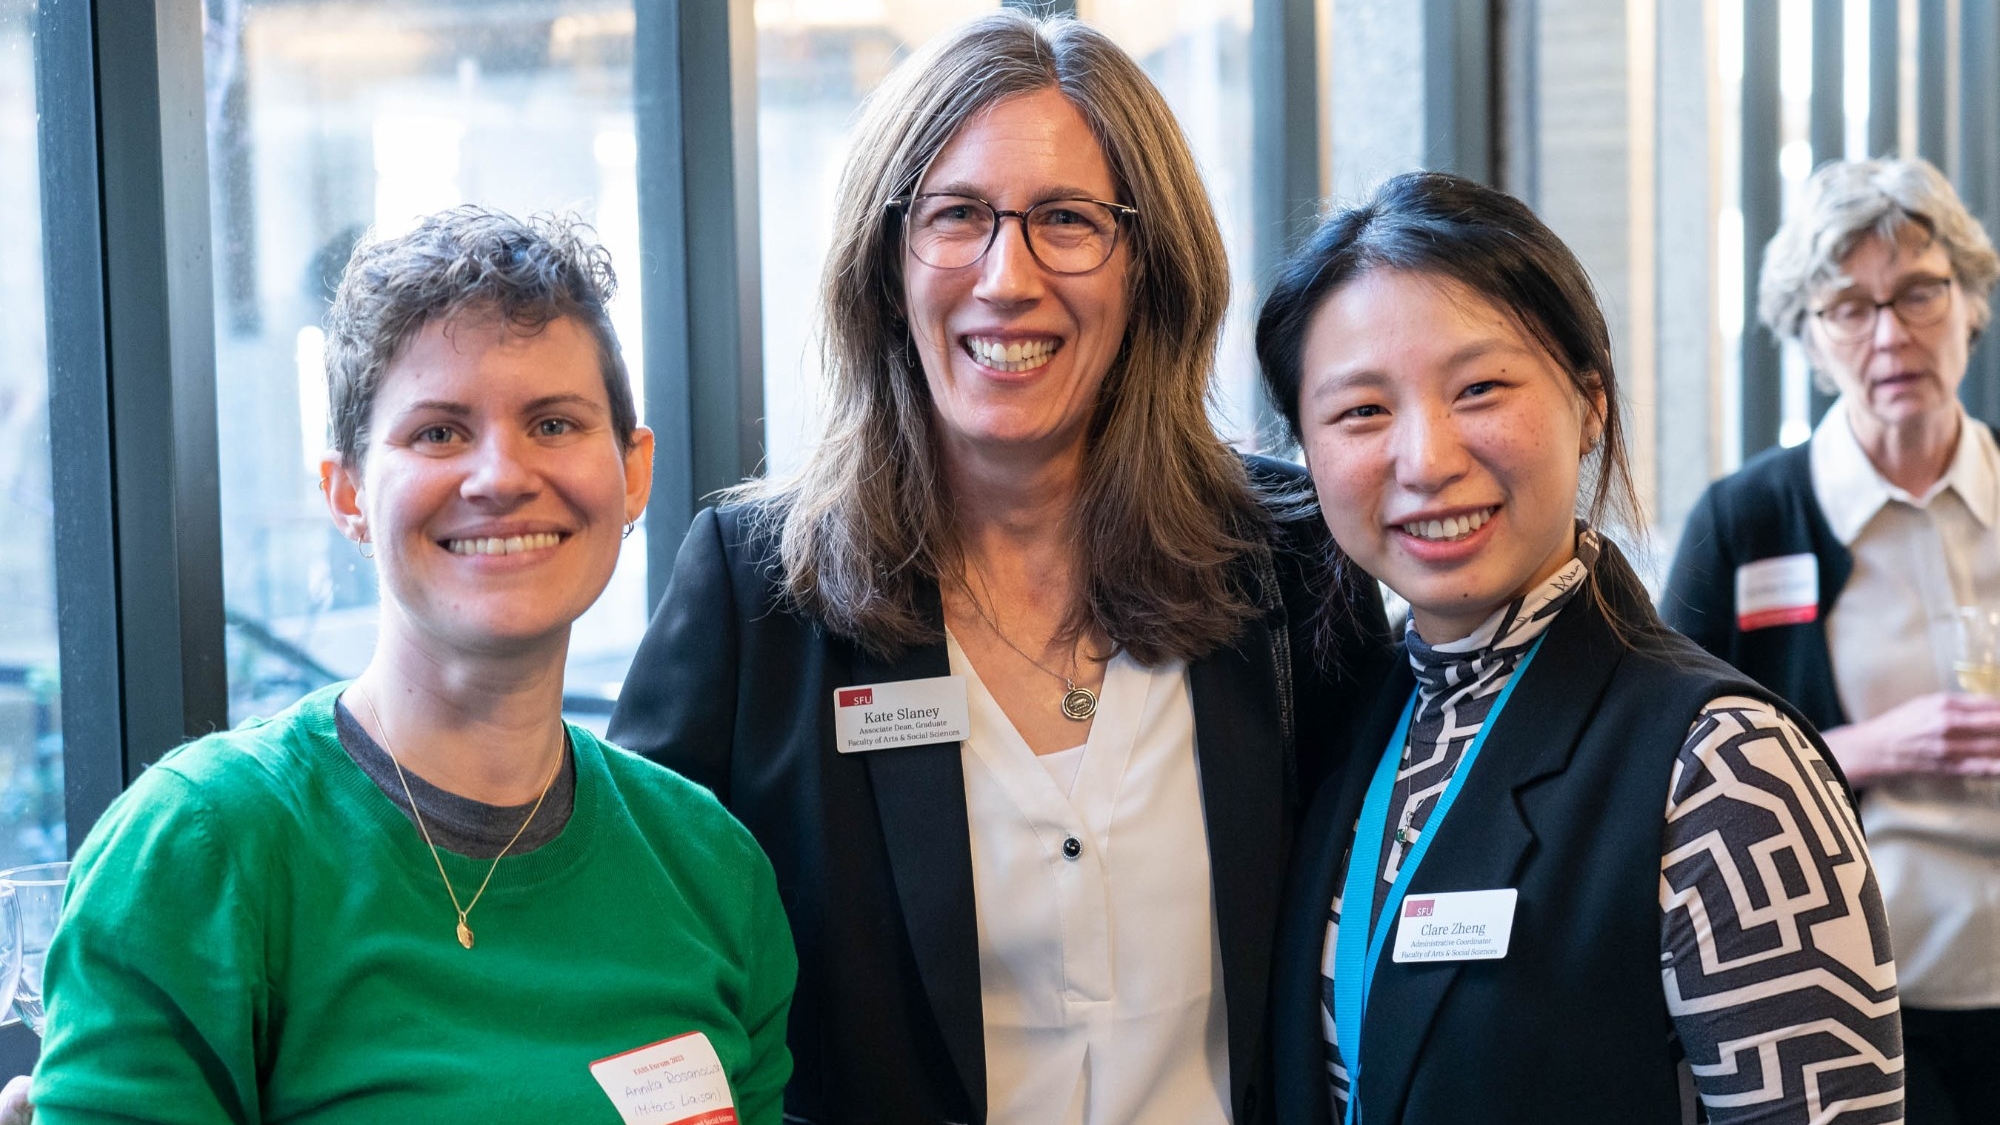 Annika Rosanowski, Kate Slaney, and Clare Zheng at FASS Forum